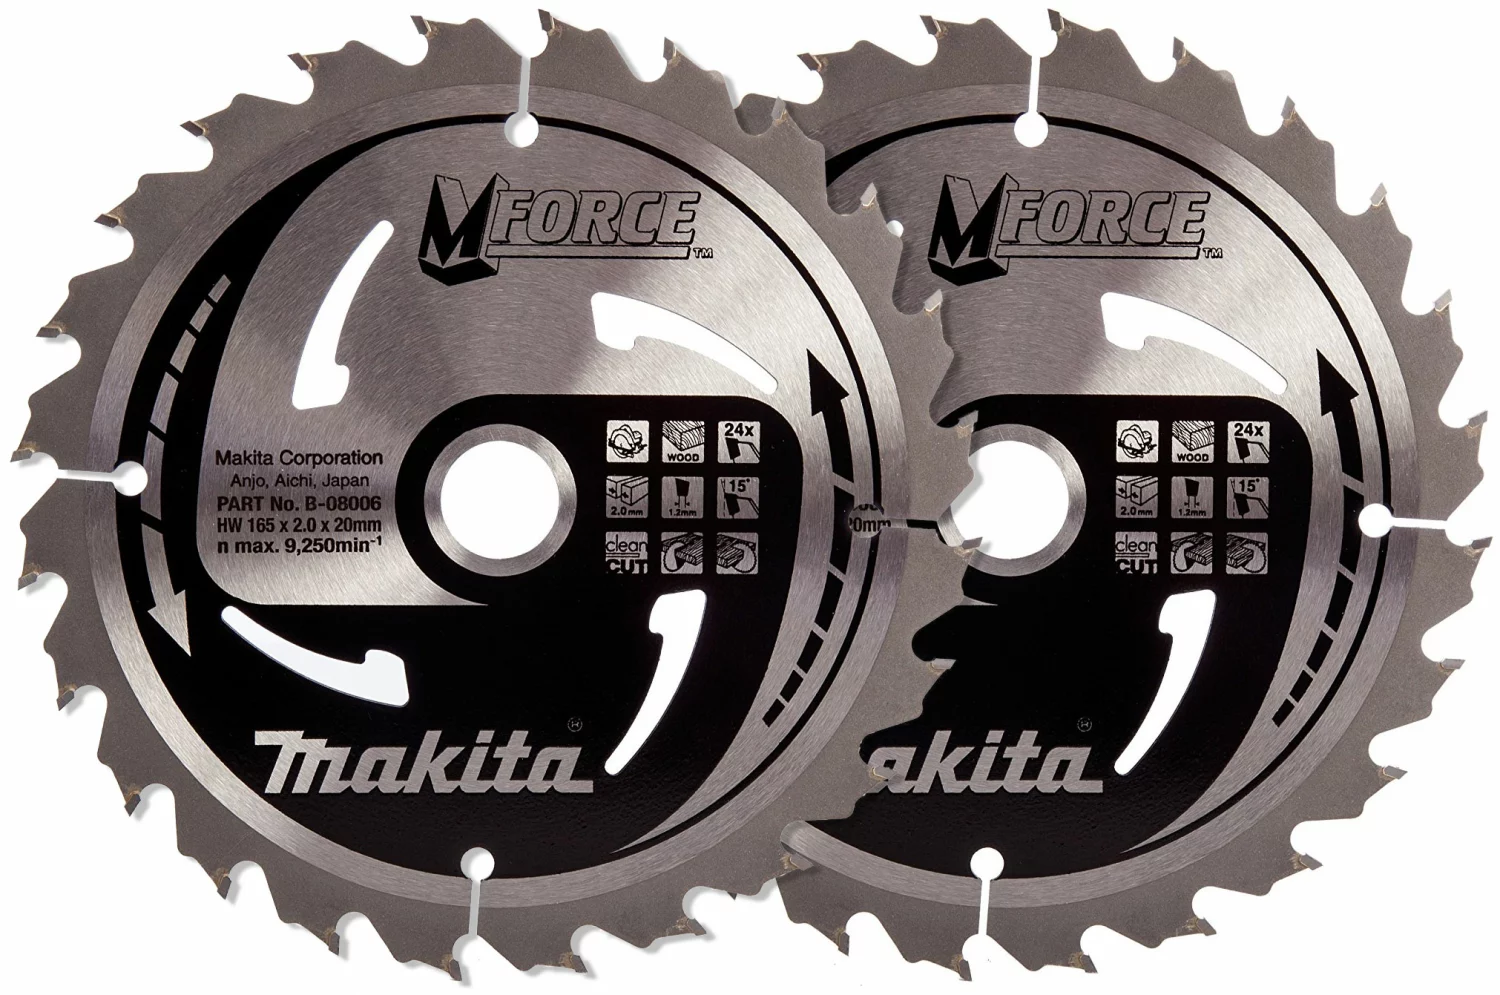 Makita Mforce Cirkelzaagblad Duopack - 165 x 20 x 24T - Hout-image